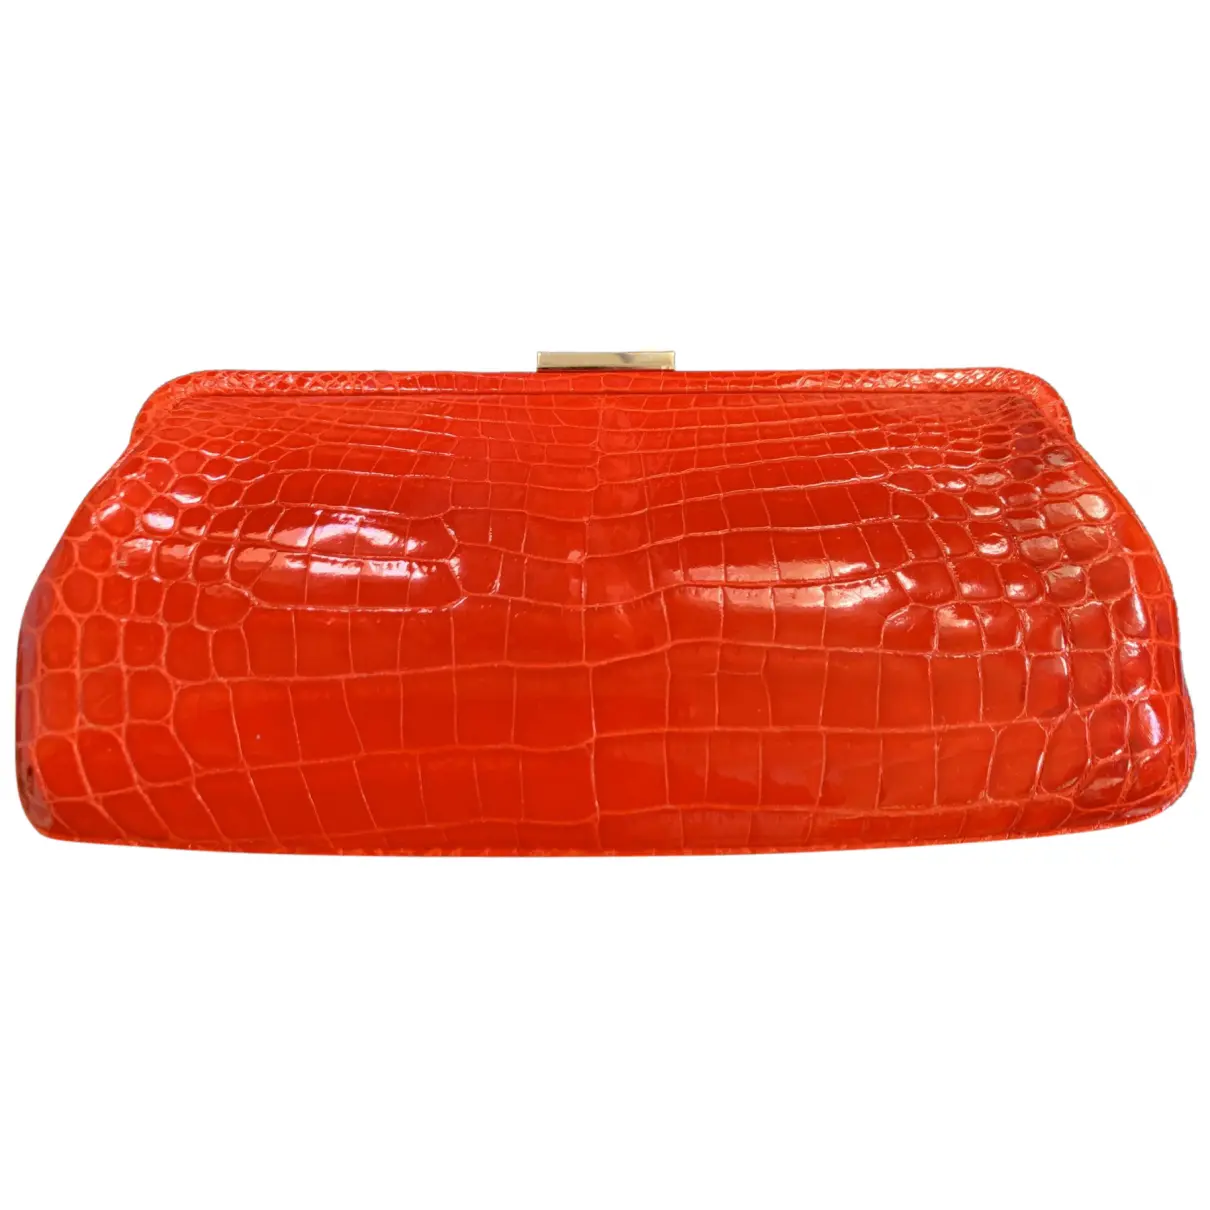 Crocodile clutch bag